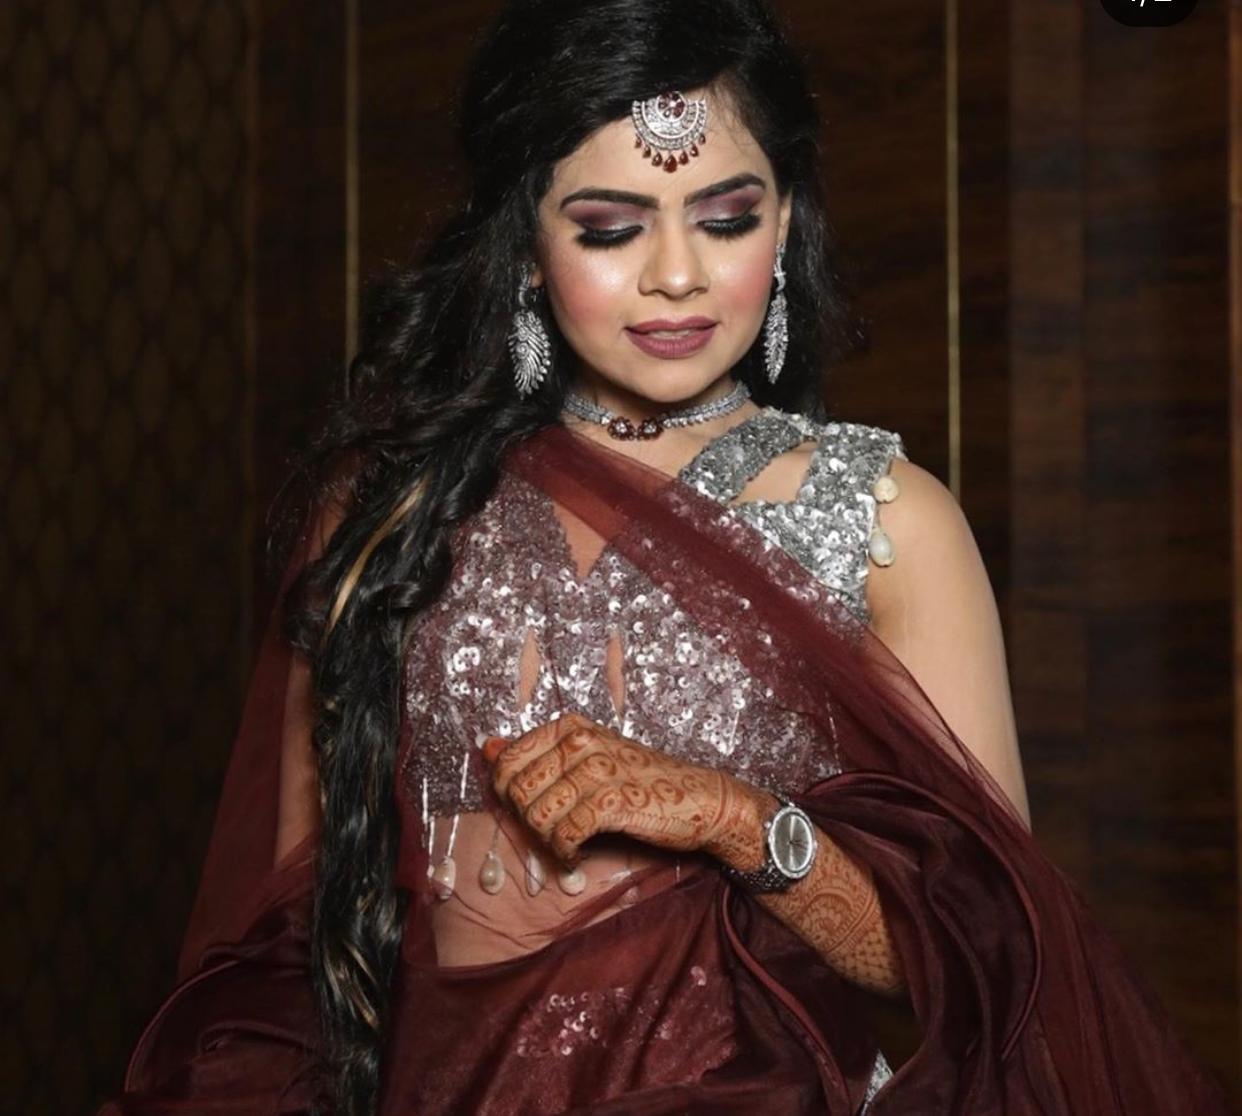 riya-narang-makeup-artist-ludhiana